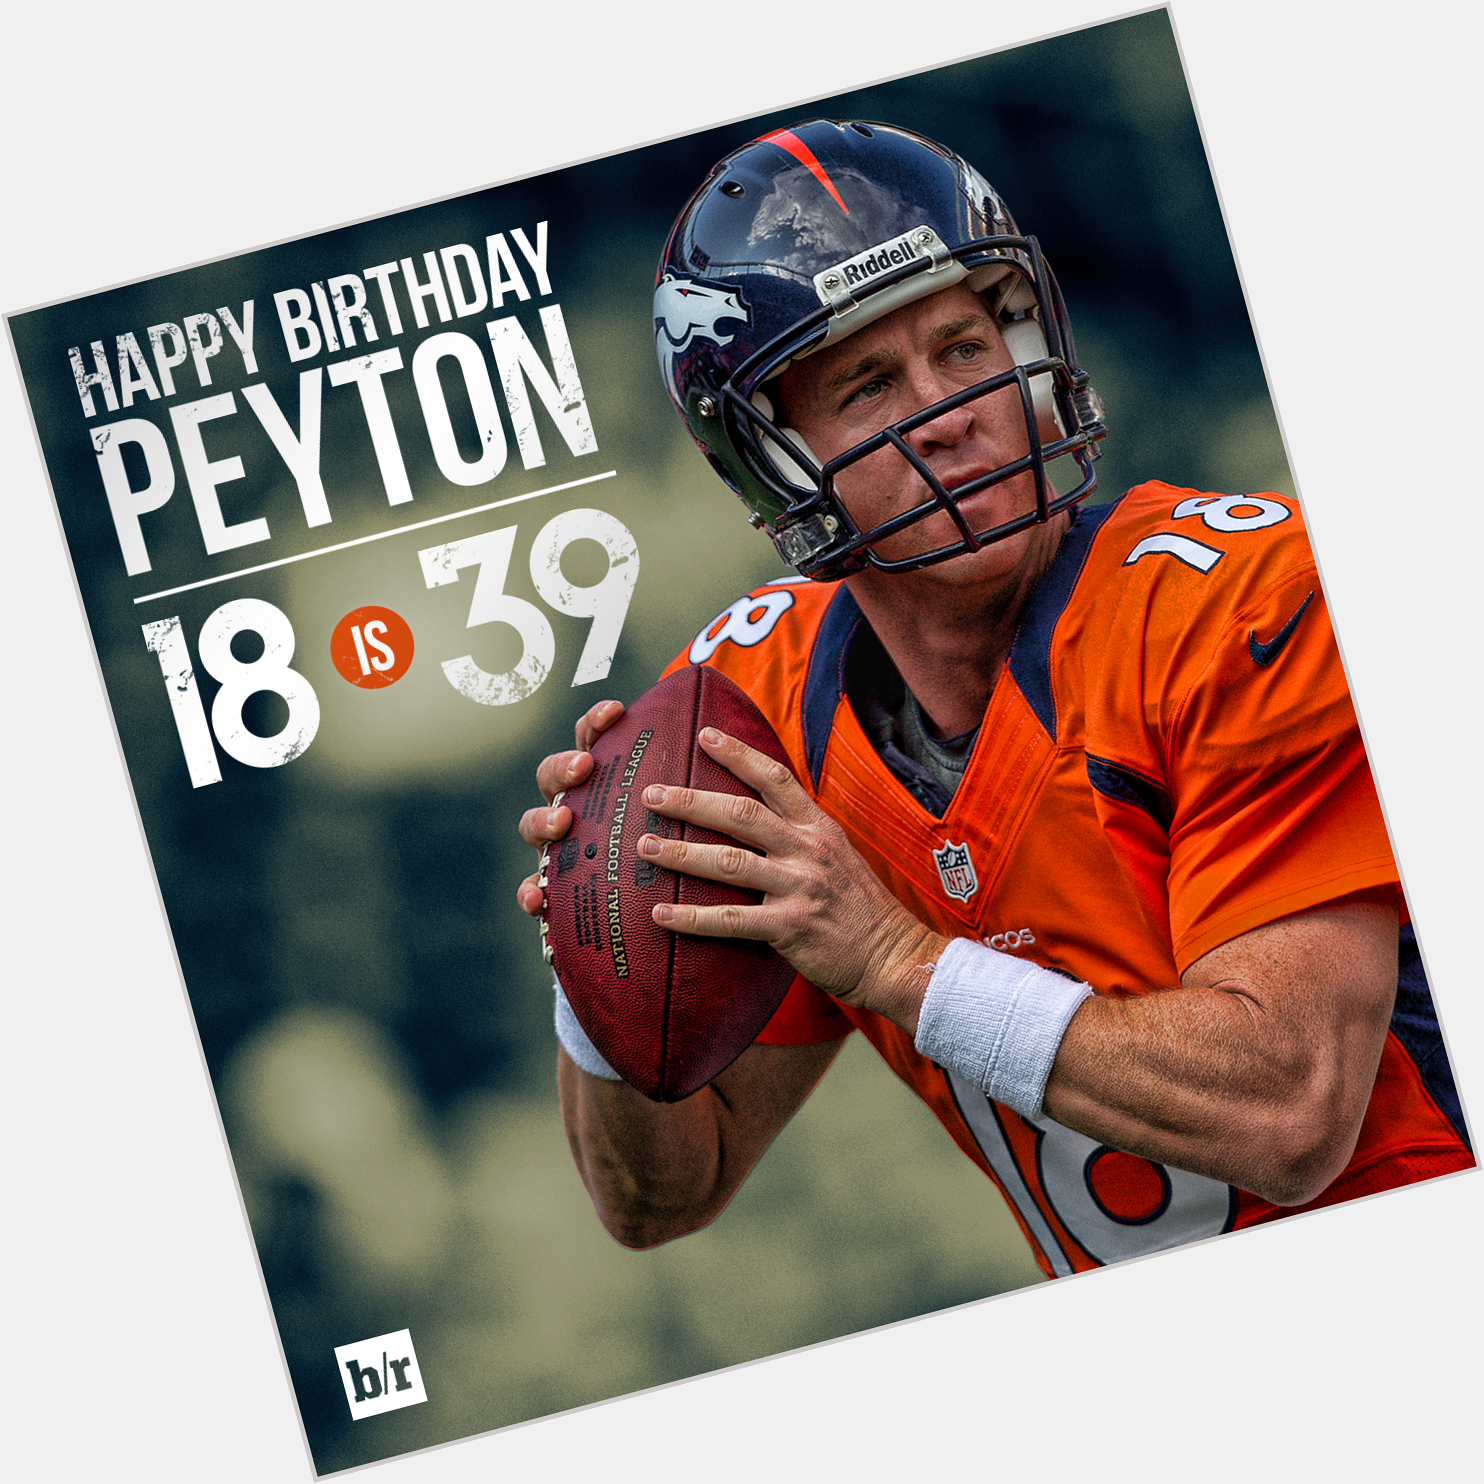 Happy 39th birthday to Peyton Manning! 